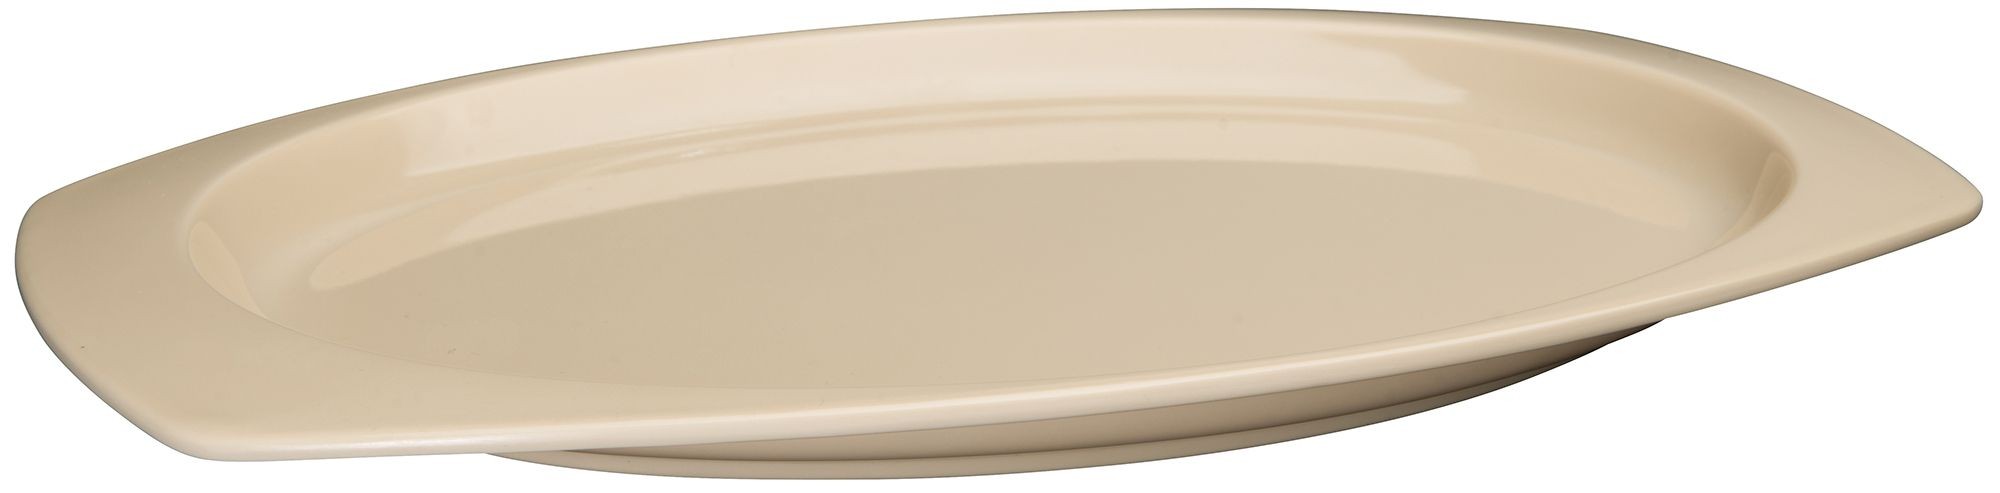 Winco MMPT-117 Tan Melamine Rectangular Platter, 11-1/2" x 7-1/2"